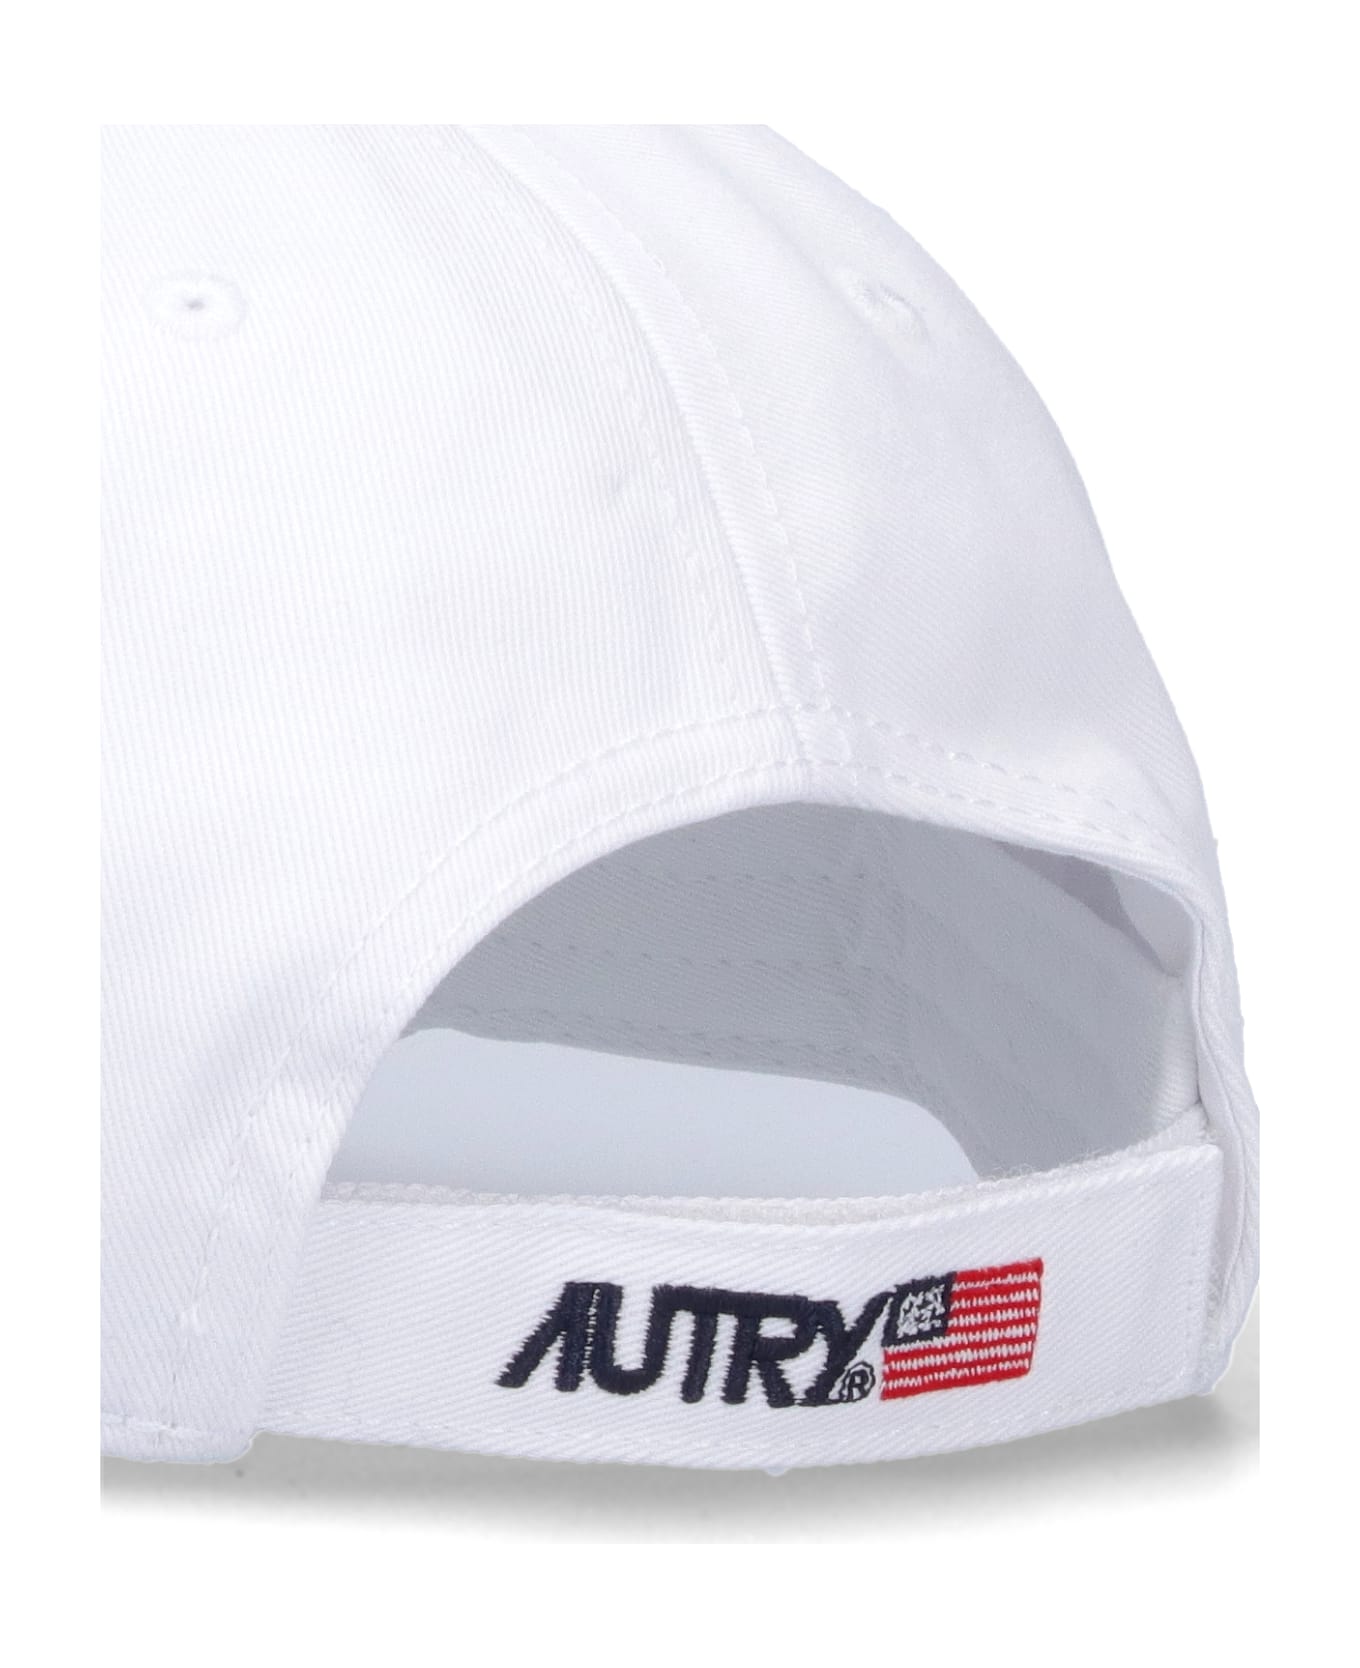 Autry Bob Lutz Baseball Hat - White